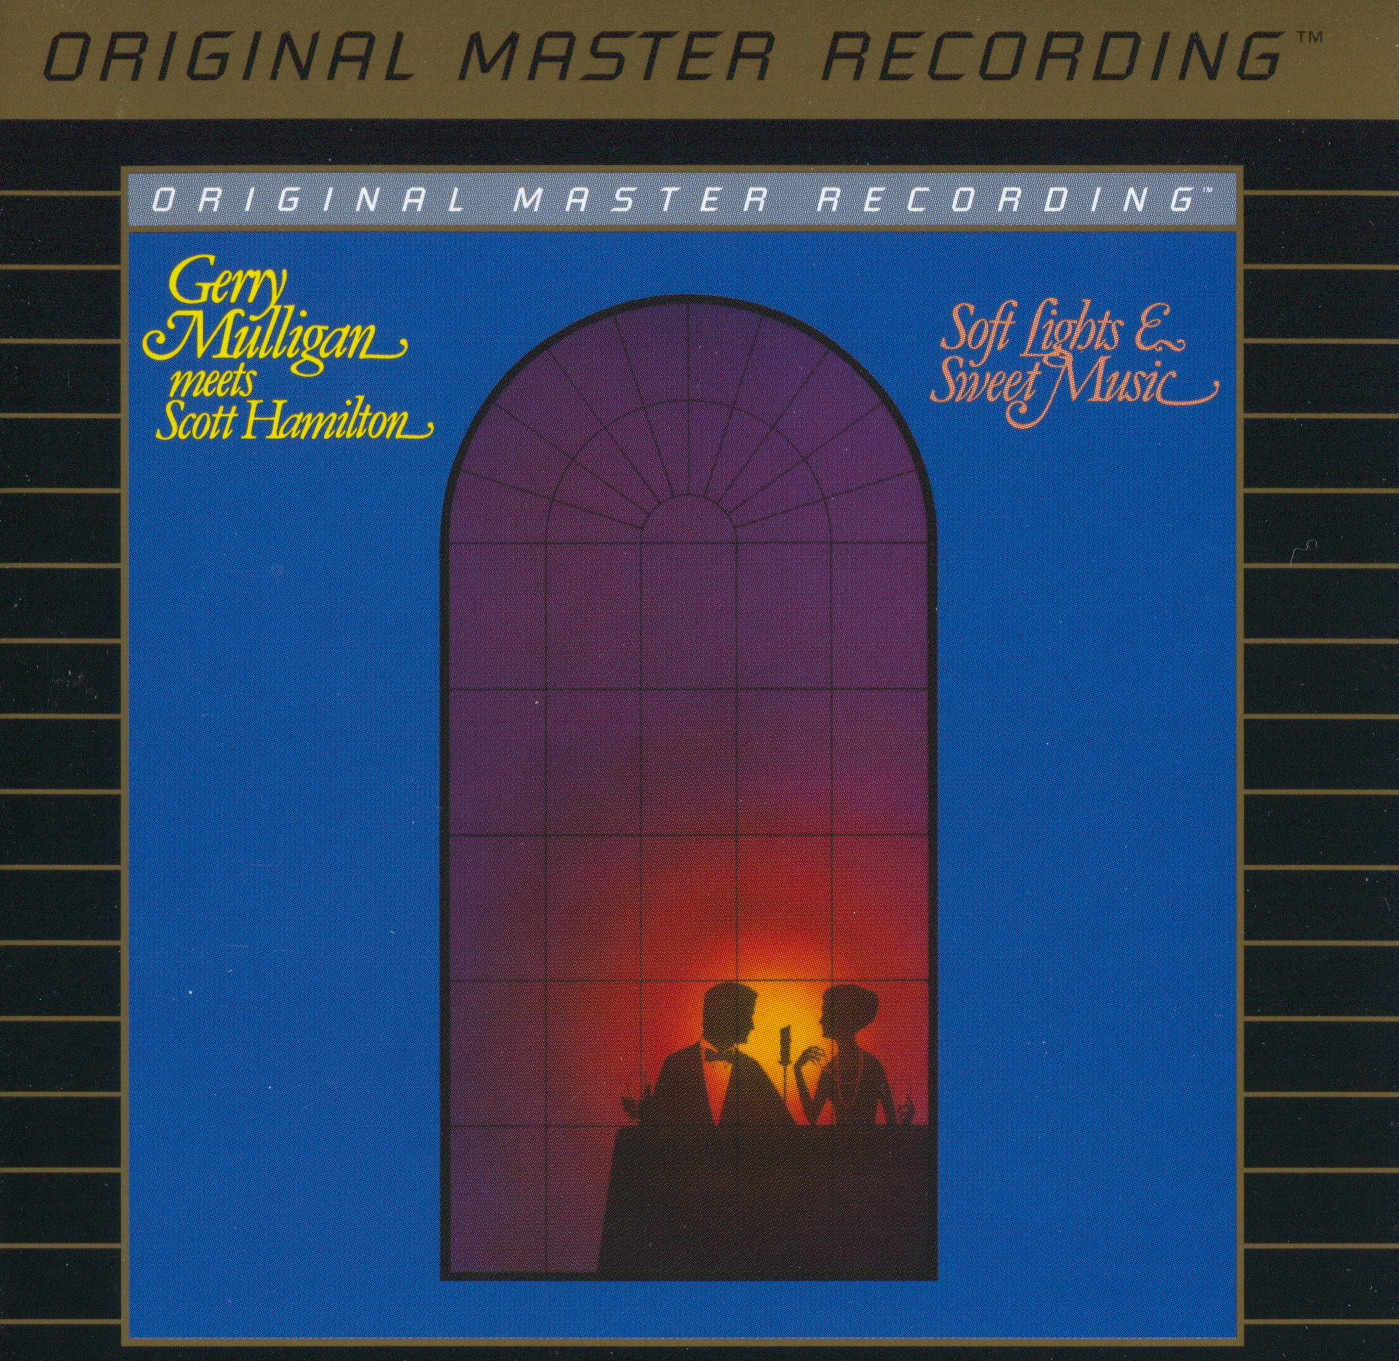 Gerry Mulligan Meets Scott Hamilton – Soft Lights & Sweet Music (1986) [MFSL 2006] SACD ISO + Hi-Res FLAC